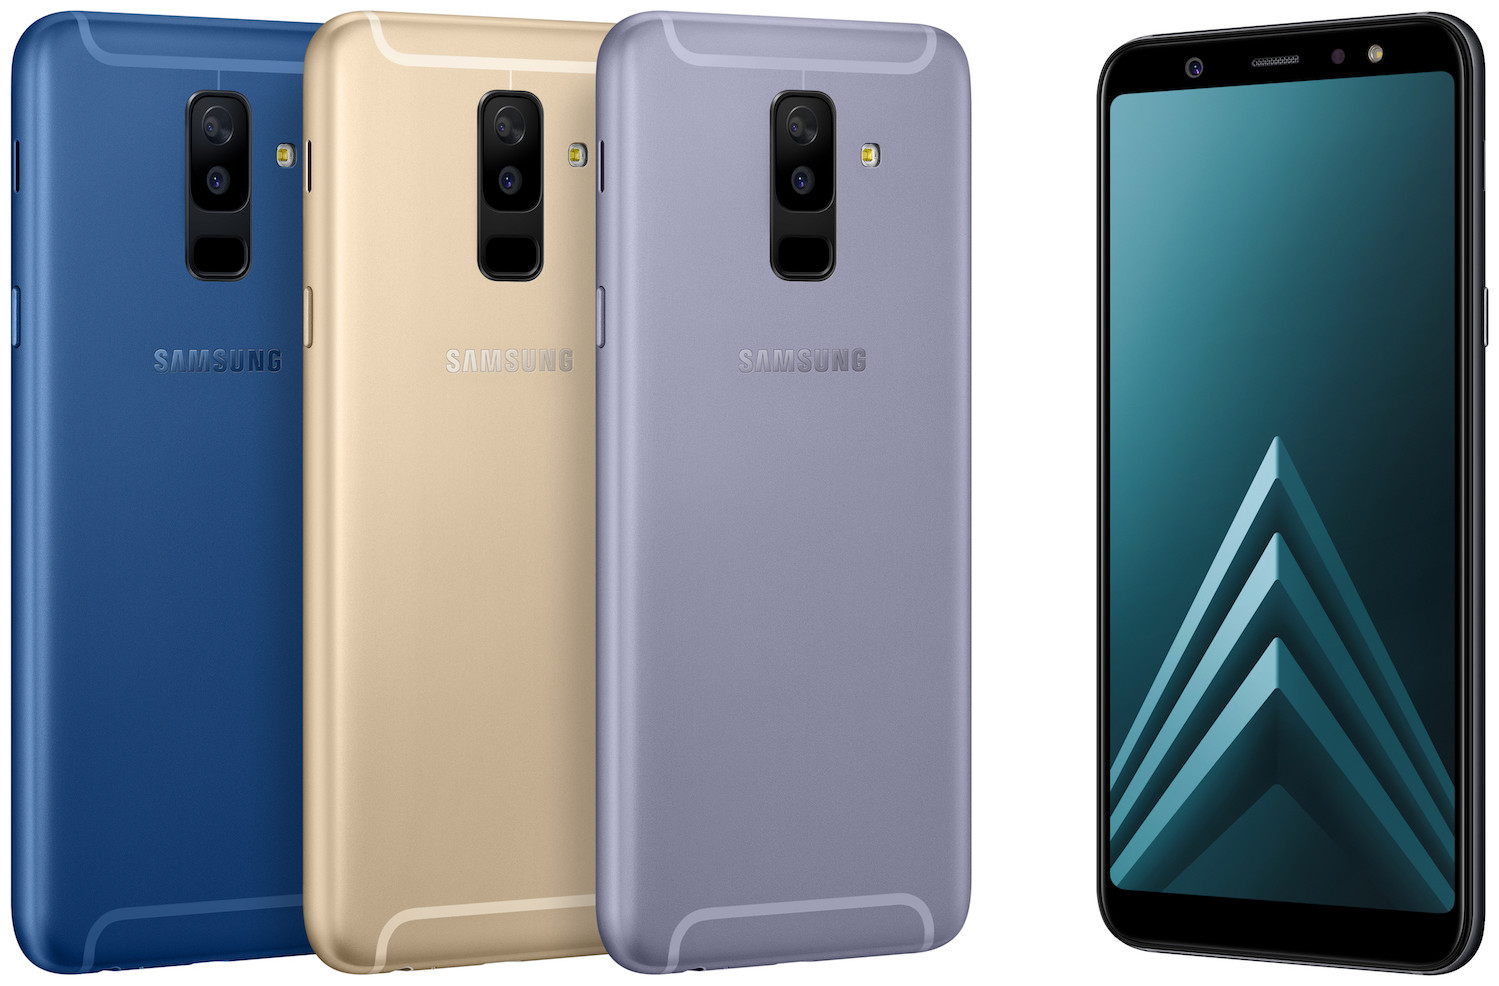 Samsung Galaxy A6+ (2018) 64GB Dual SIM - Specs and Price